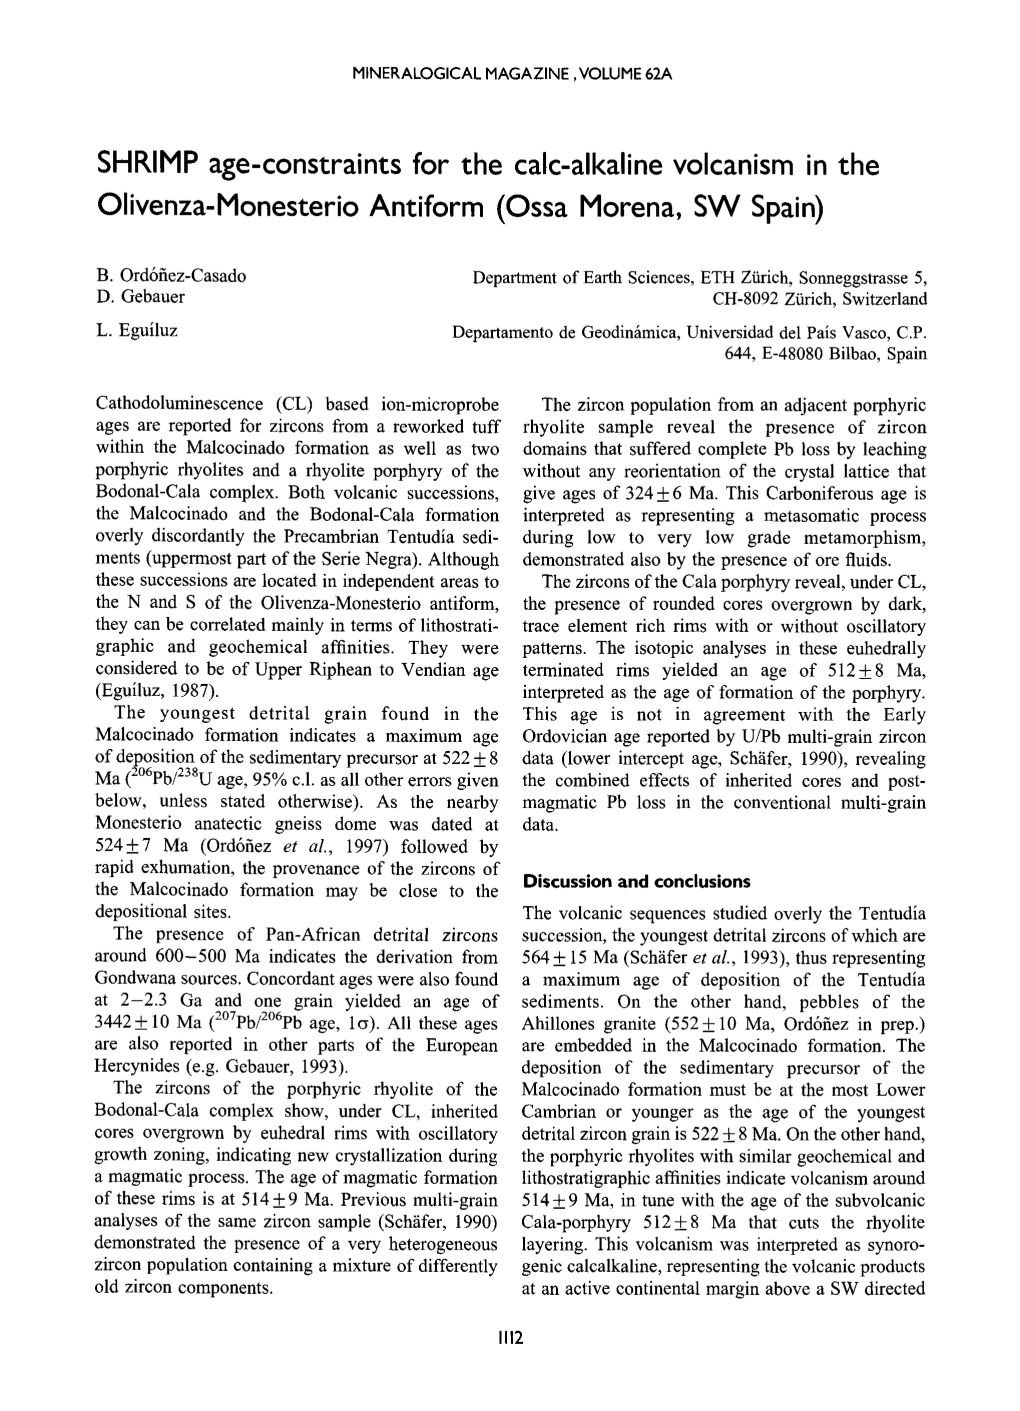 SHRIMP Age-Constraints for the Calc-Alkaline Volcanism in the Olivenza-Monesterio Antiform (Ossa Morena, SW Spain)